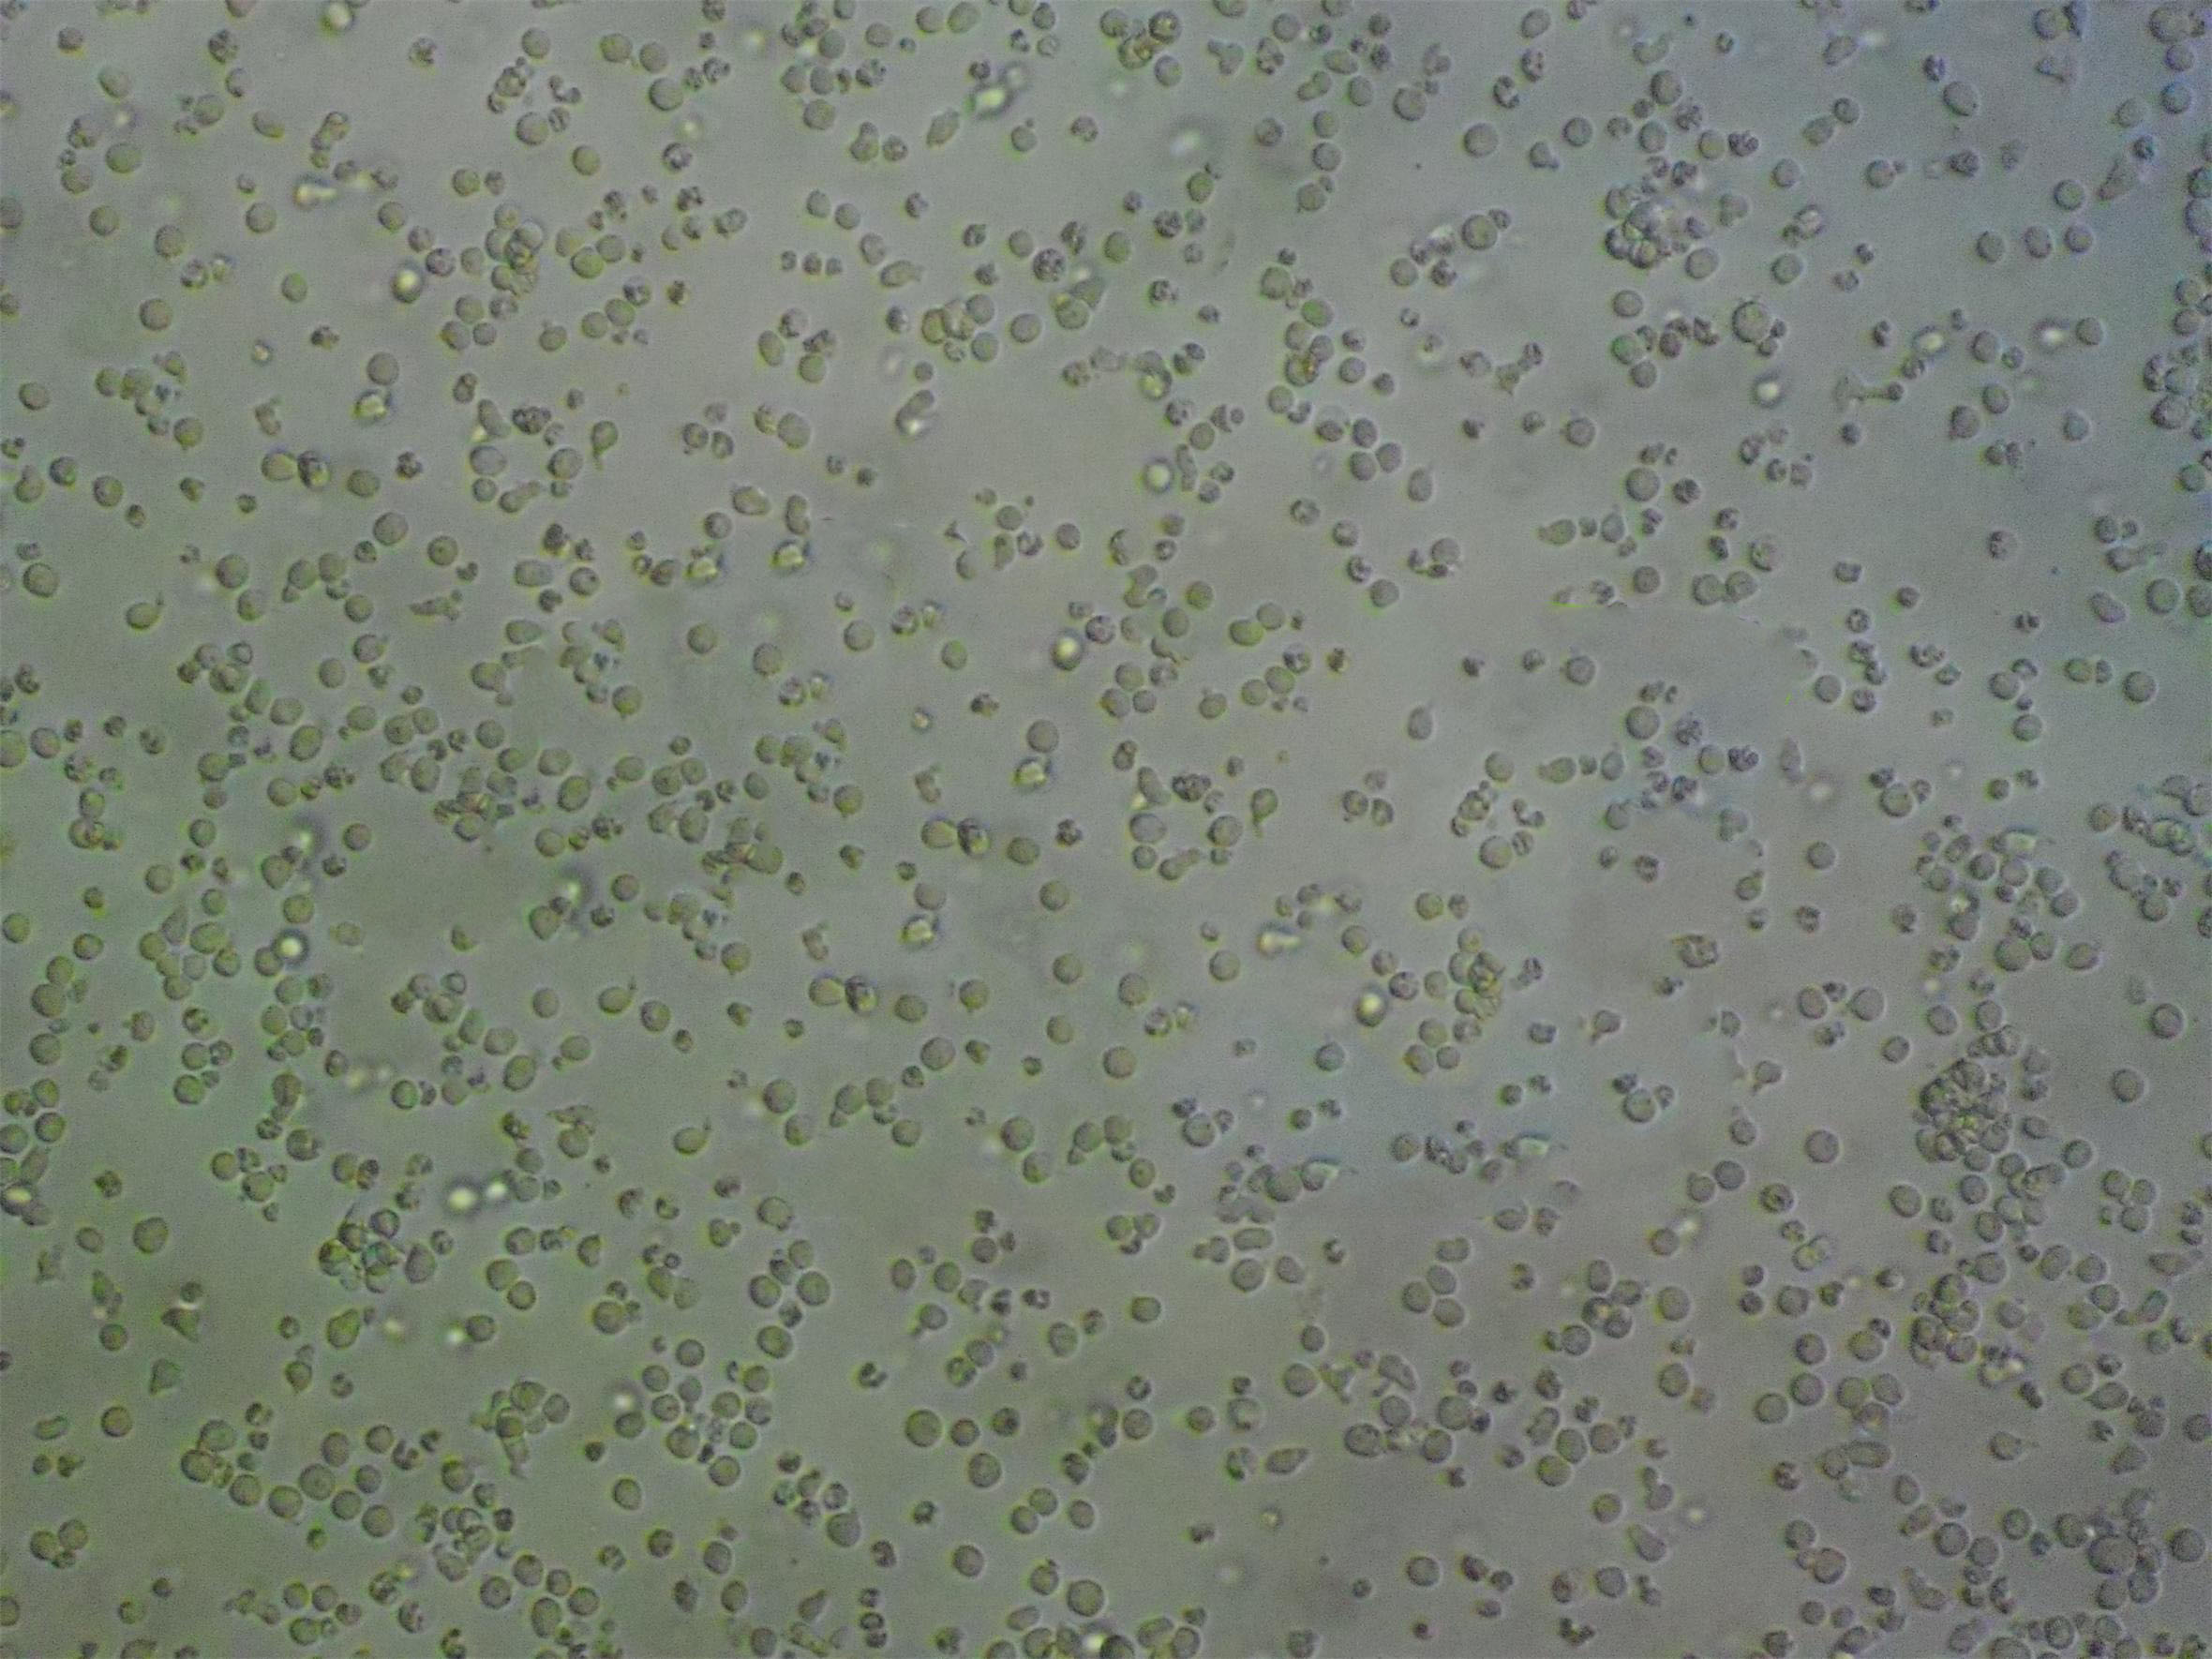 ANA-1 Lymphoblastoid cells小鼠巨噬细胞系